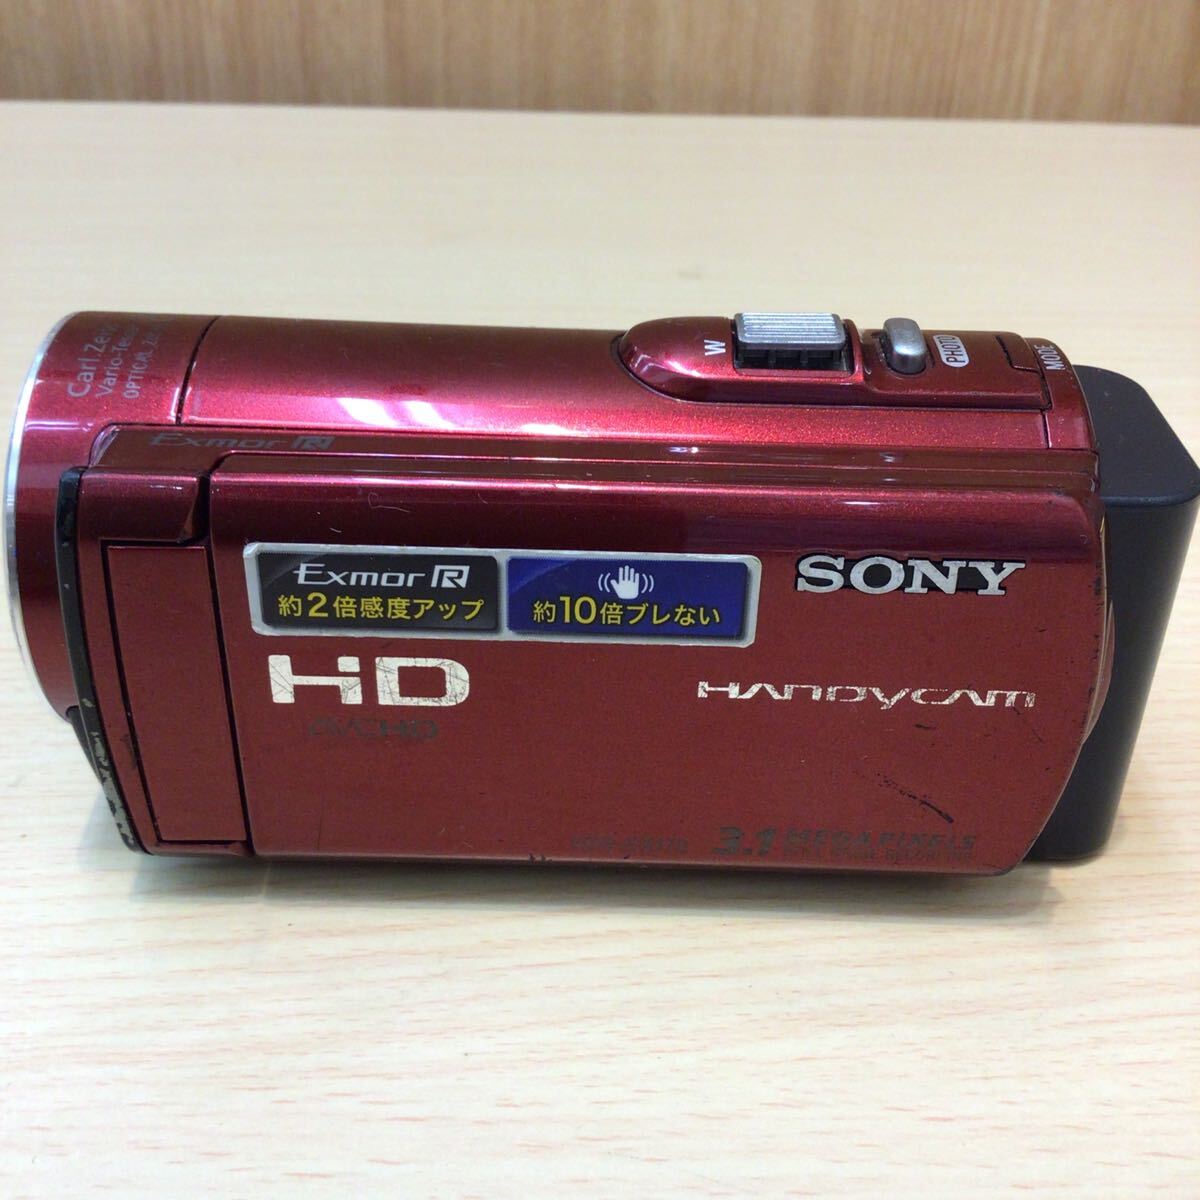 SONY HD HANDYCAM ソニー ハンディカム デジタルビデオカメラ HDR-CX170 撮影可能 の画像1